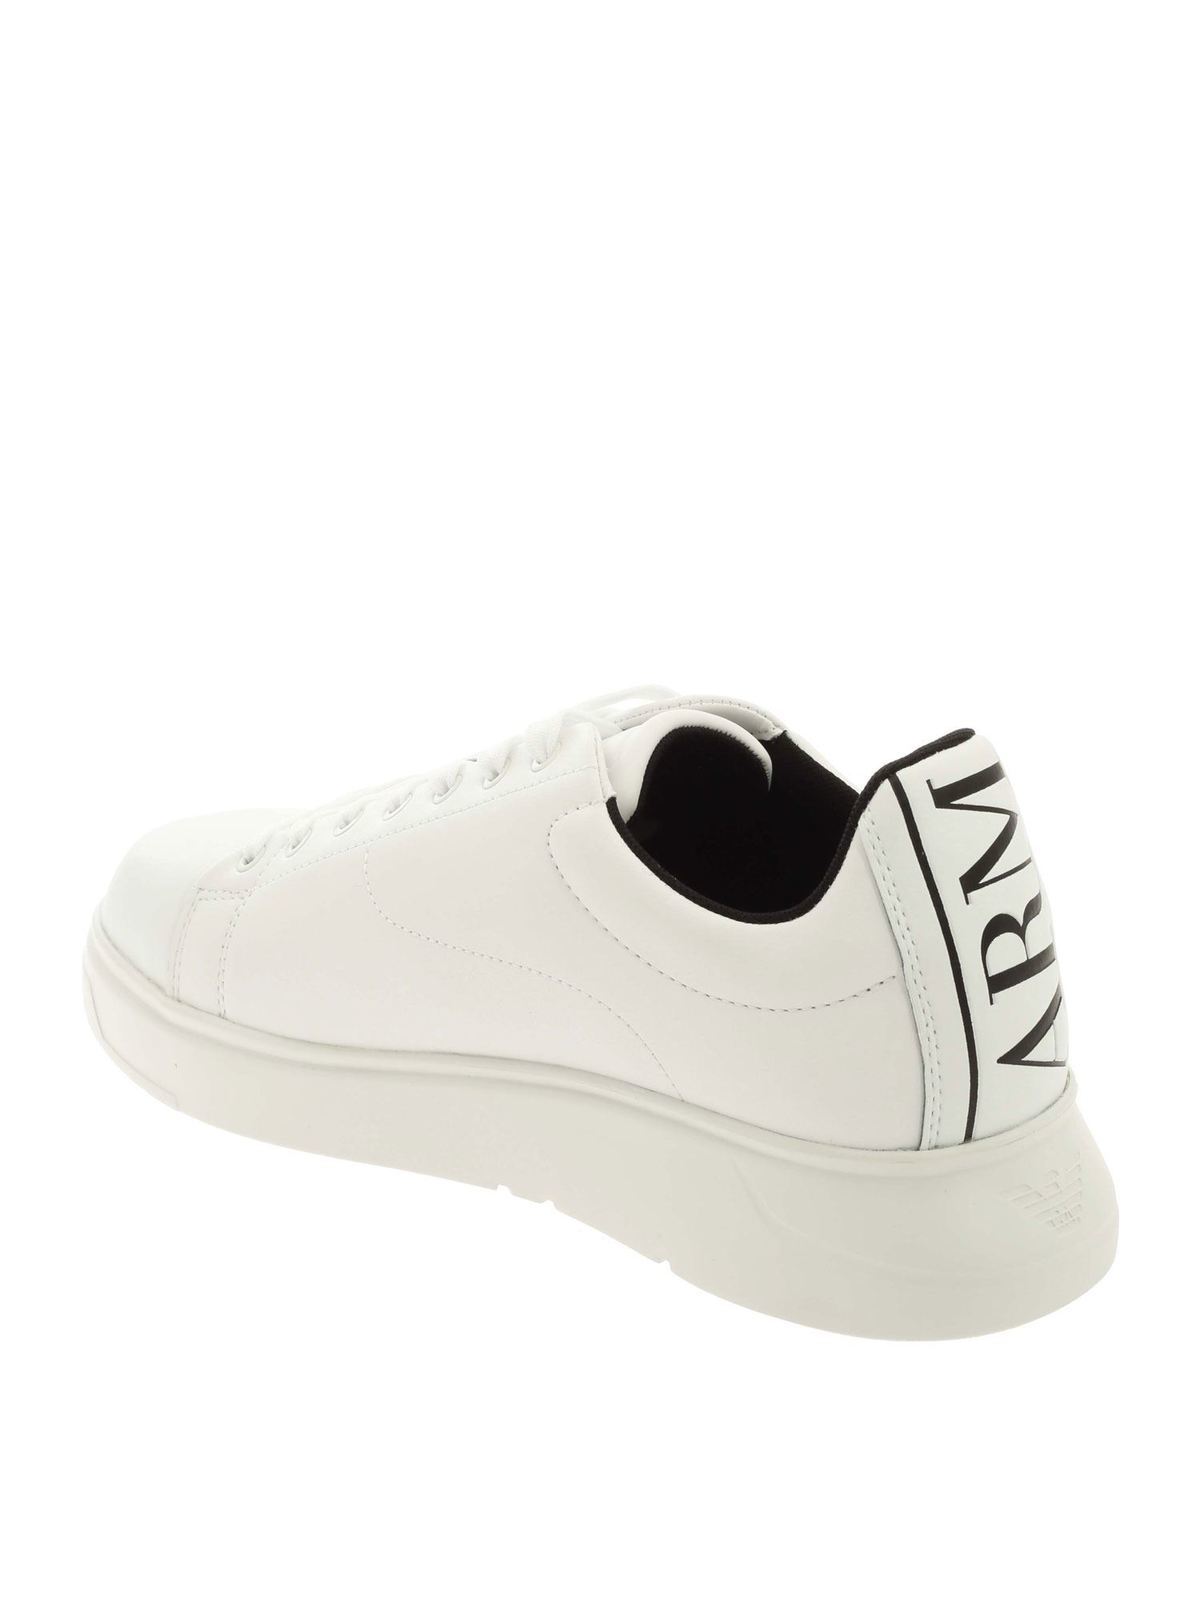 Kaap Dezelfde Gemaakt van Trainers Emporio Armani - Branded sneakers in white - X4X312XM490A222